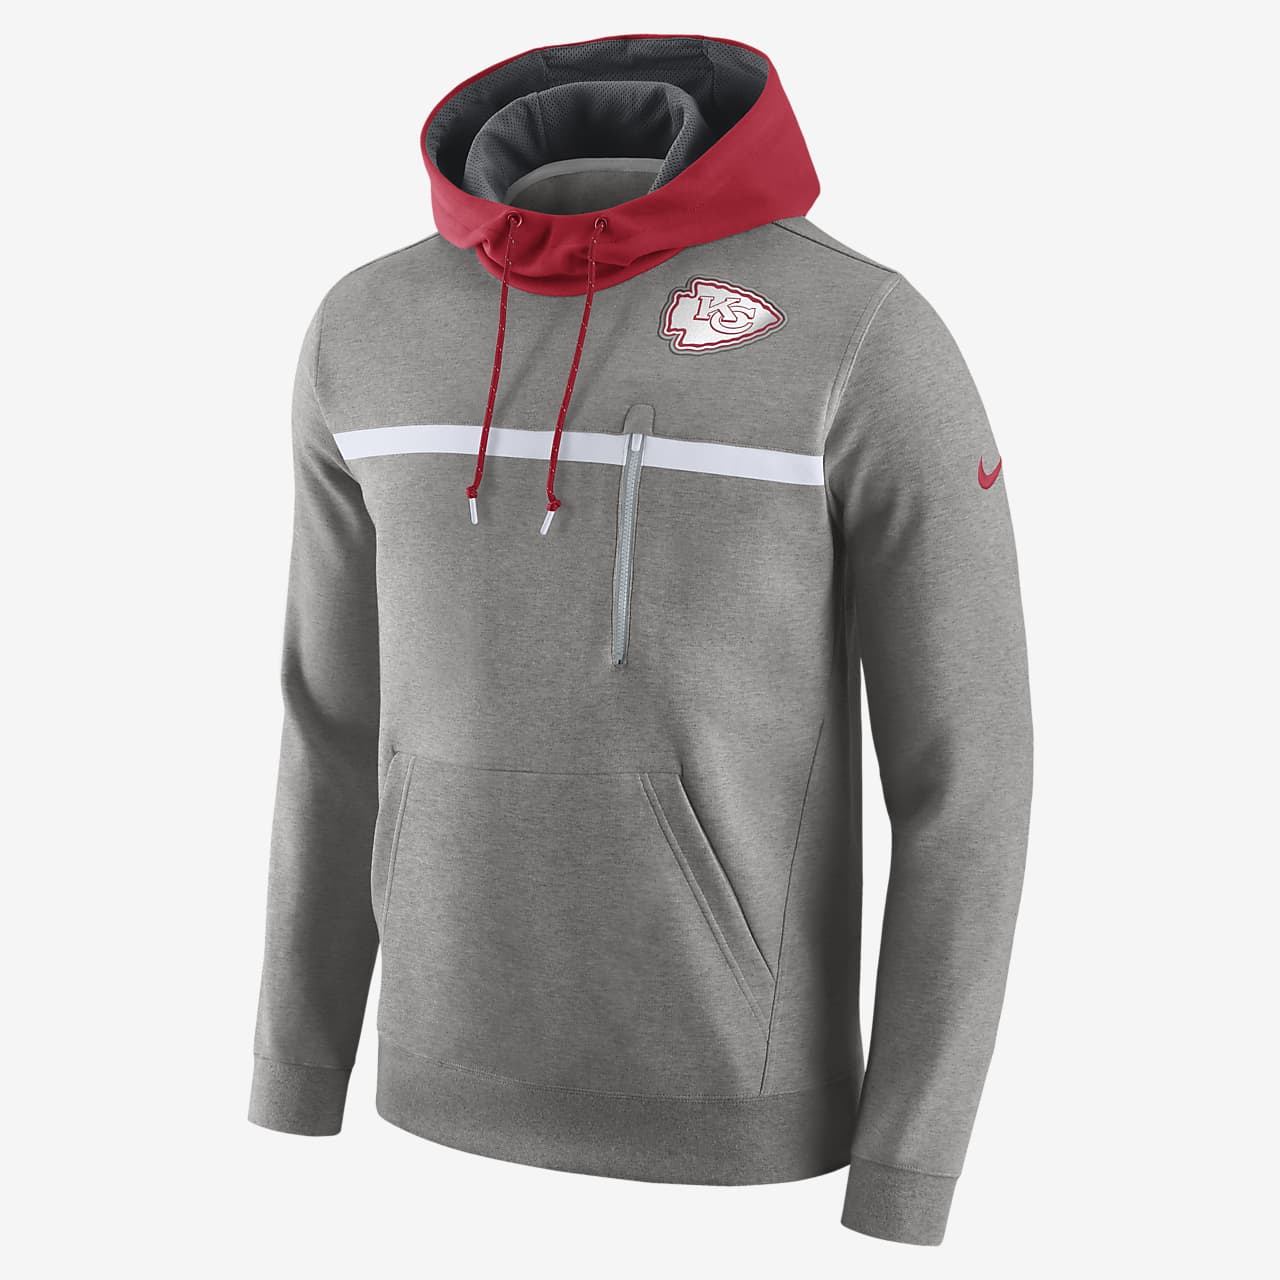 Nike Championship Drive Sweatshirt (NFL Chiefs) Men's Hoodie